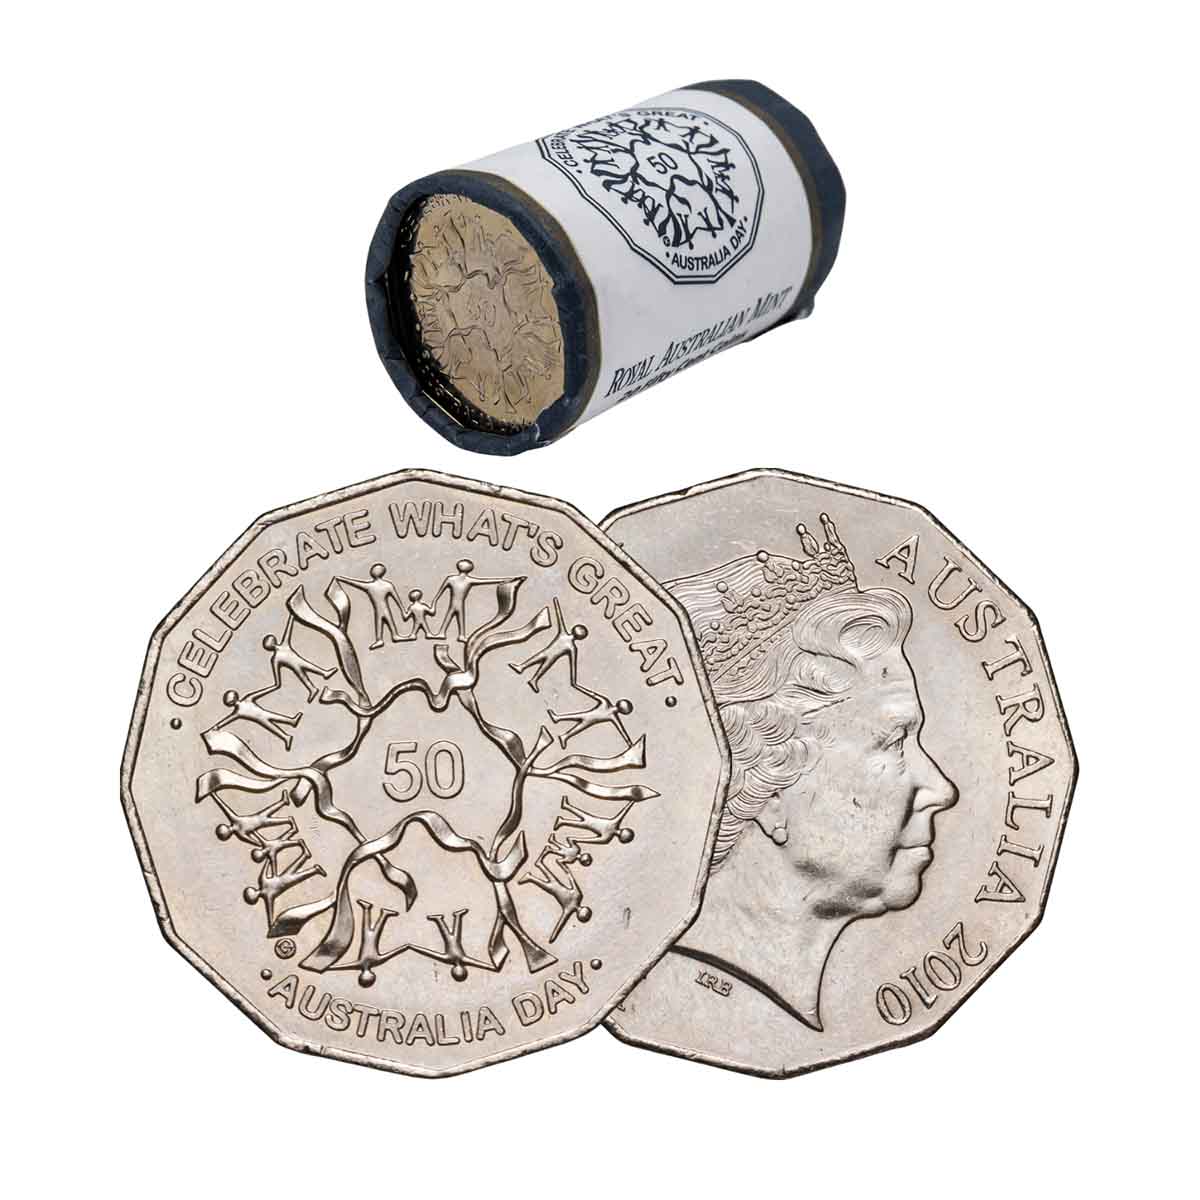 RAM 2010 50c Australia Day Mint Roll (20 Uncirculated Coins)